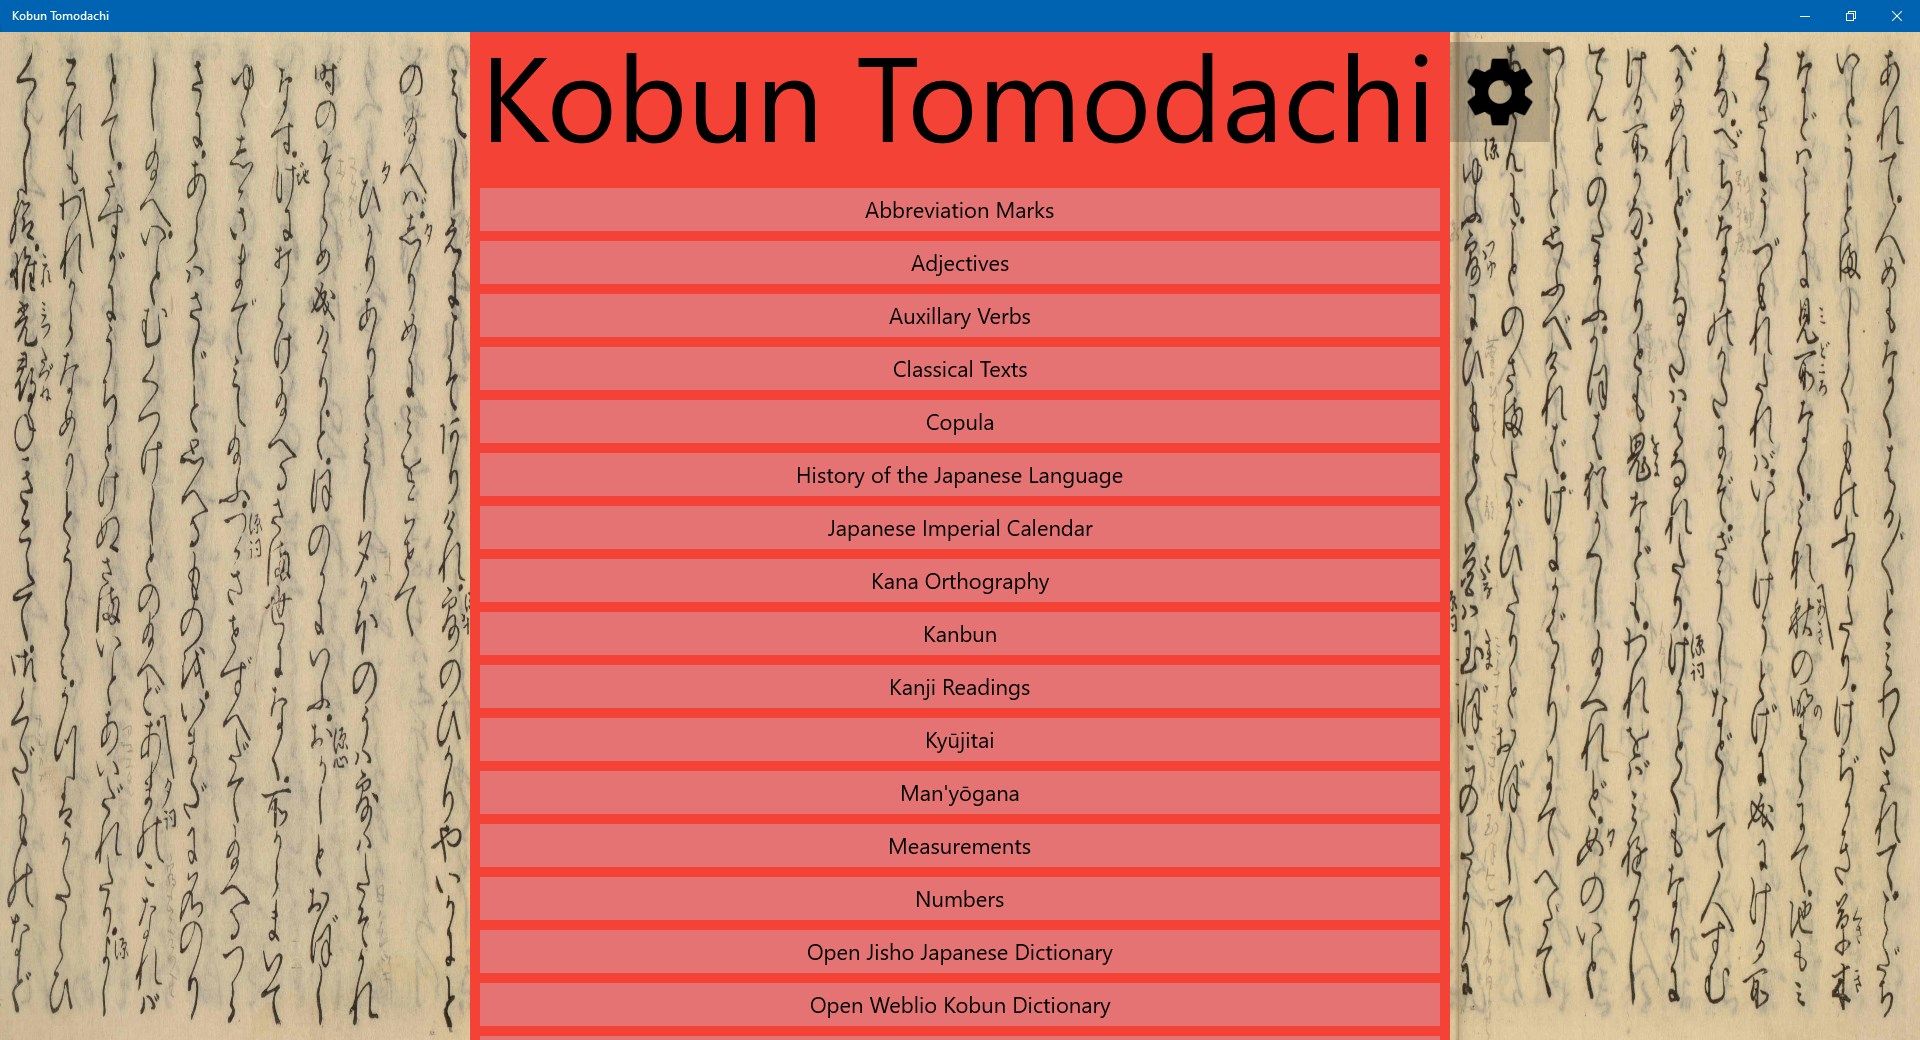 Kobun Tomodachi